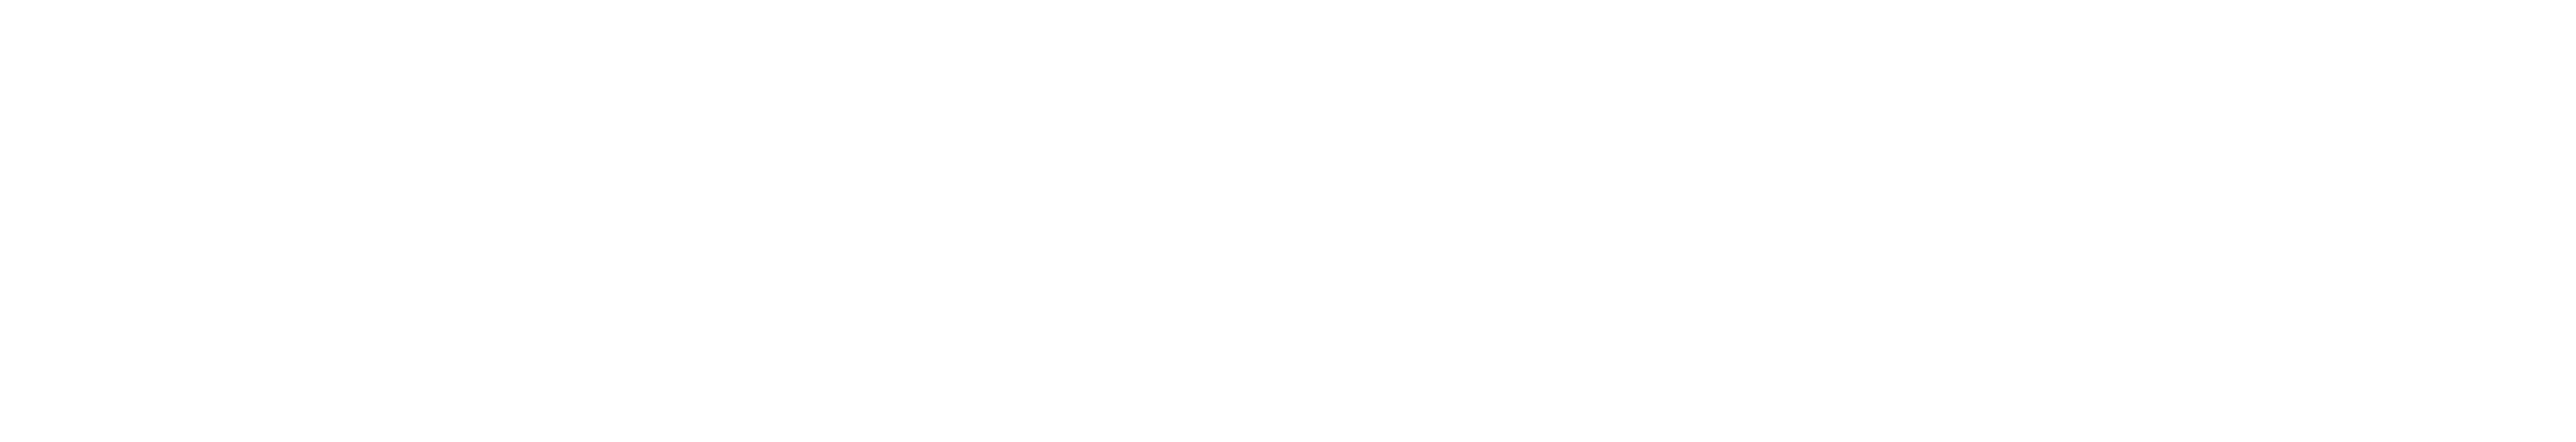 Warragul Community HouseContact Us